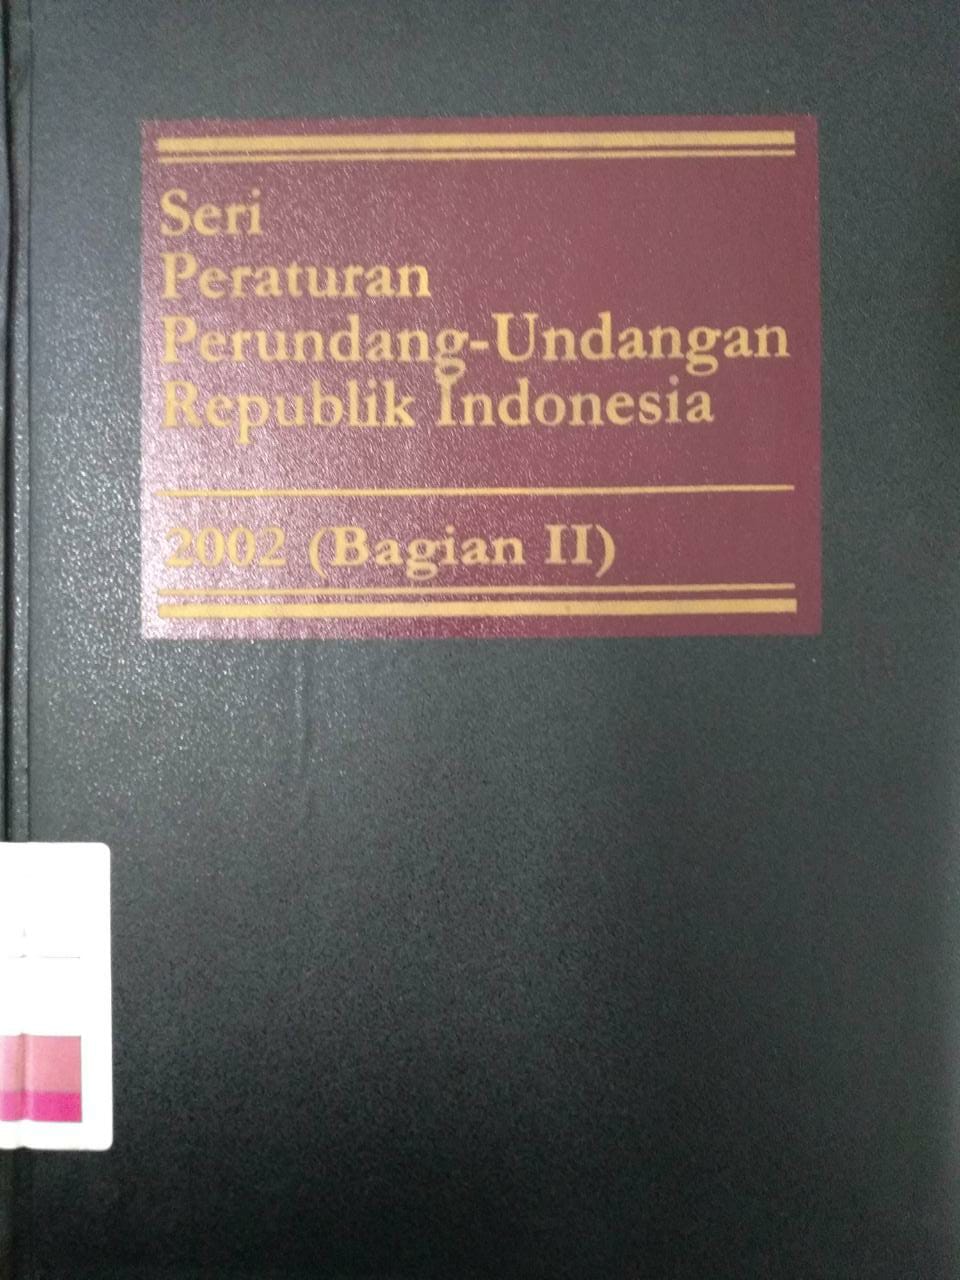 Seri Peraturan Perundang-undangan Republik Indonesia 2004 (Bagian IV). Jilid 2